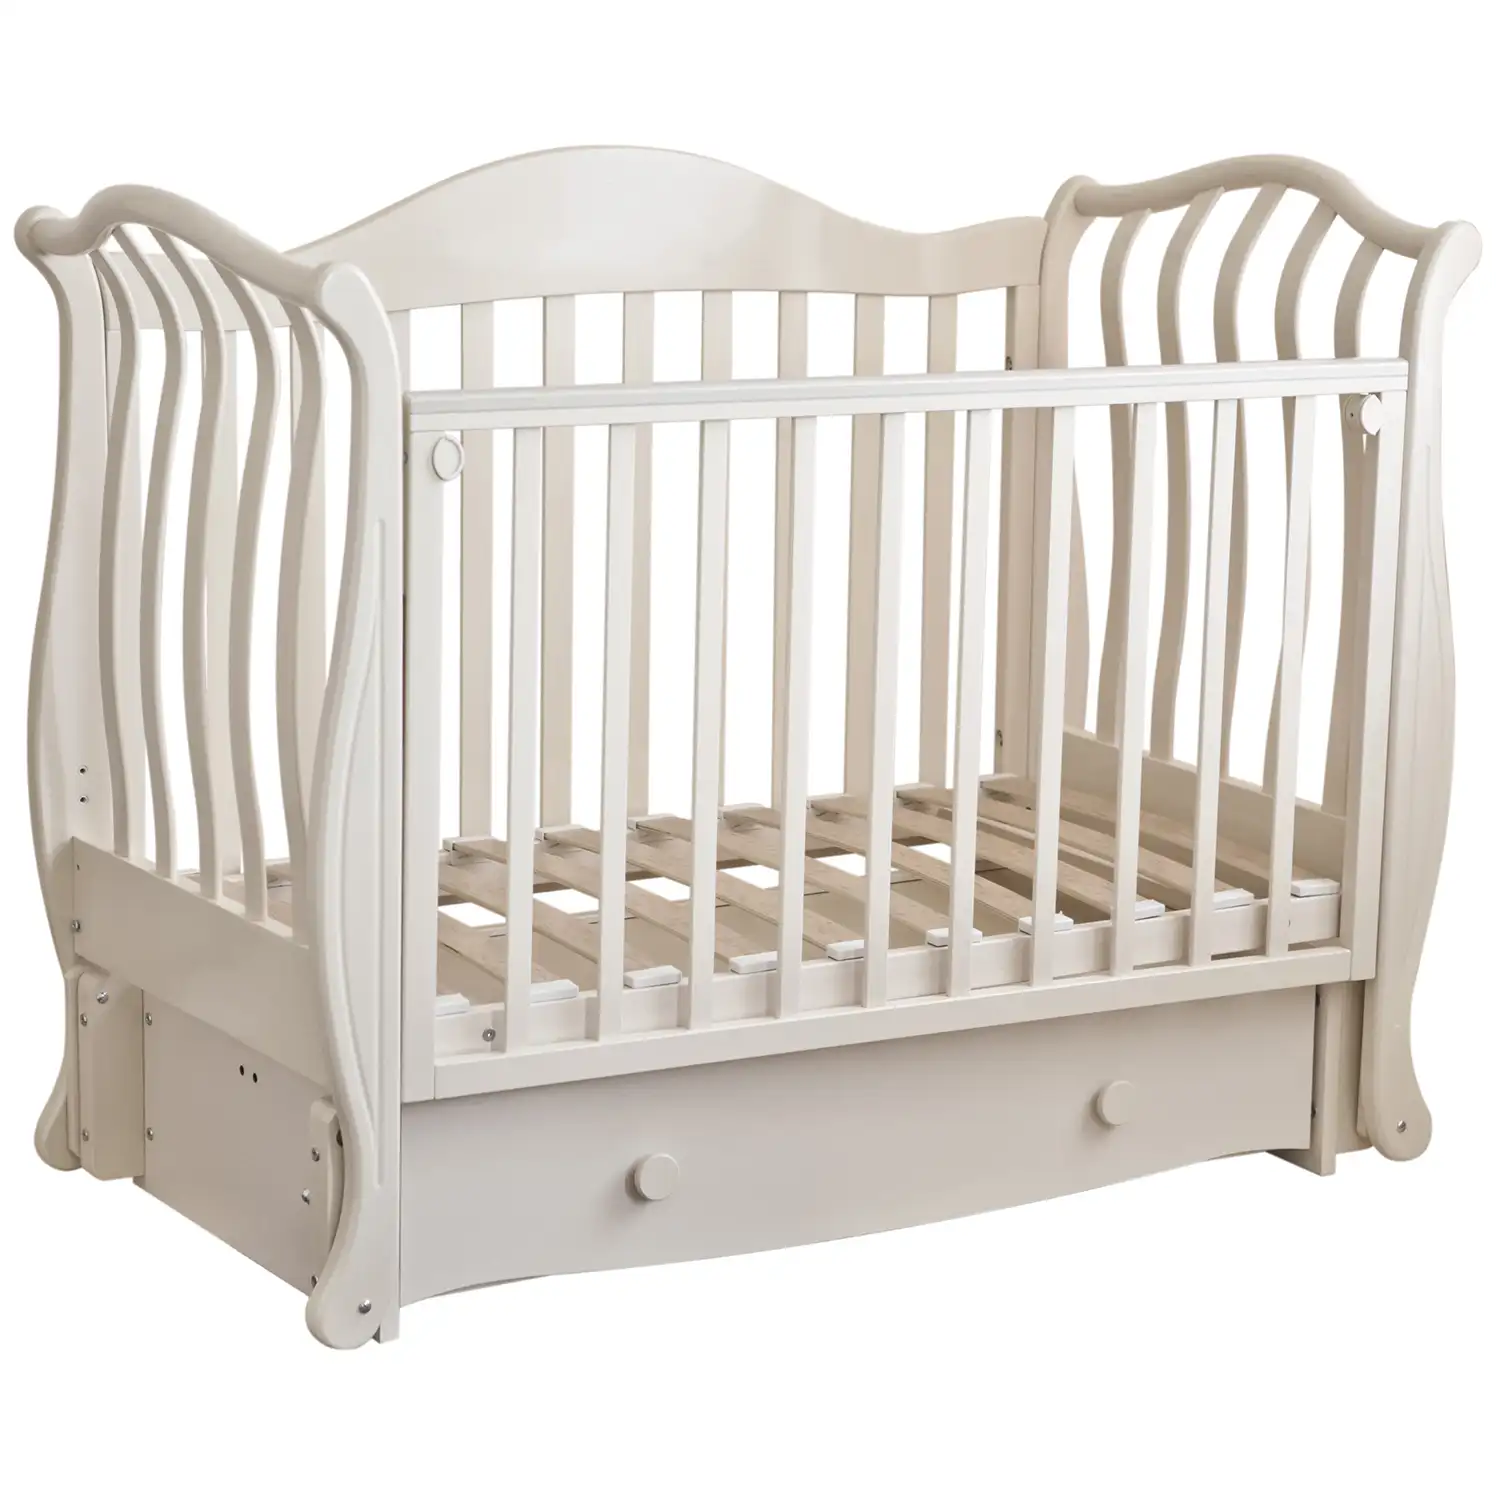 TOP Quality Children's wooden baby crib "Julianna" for sale, elegant classic design, orthopedic bed, 2 easily removable racks